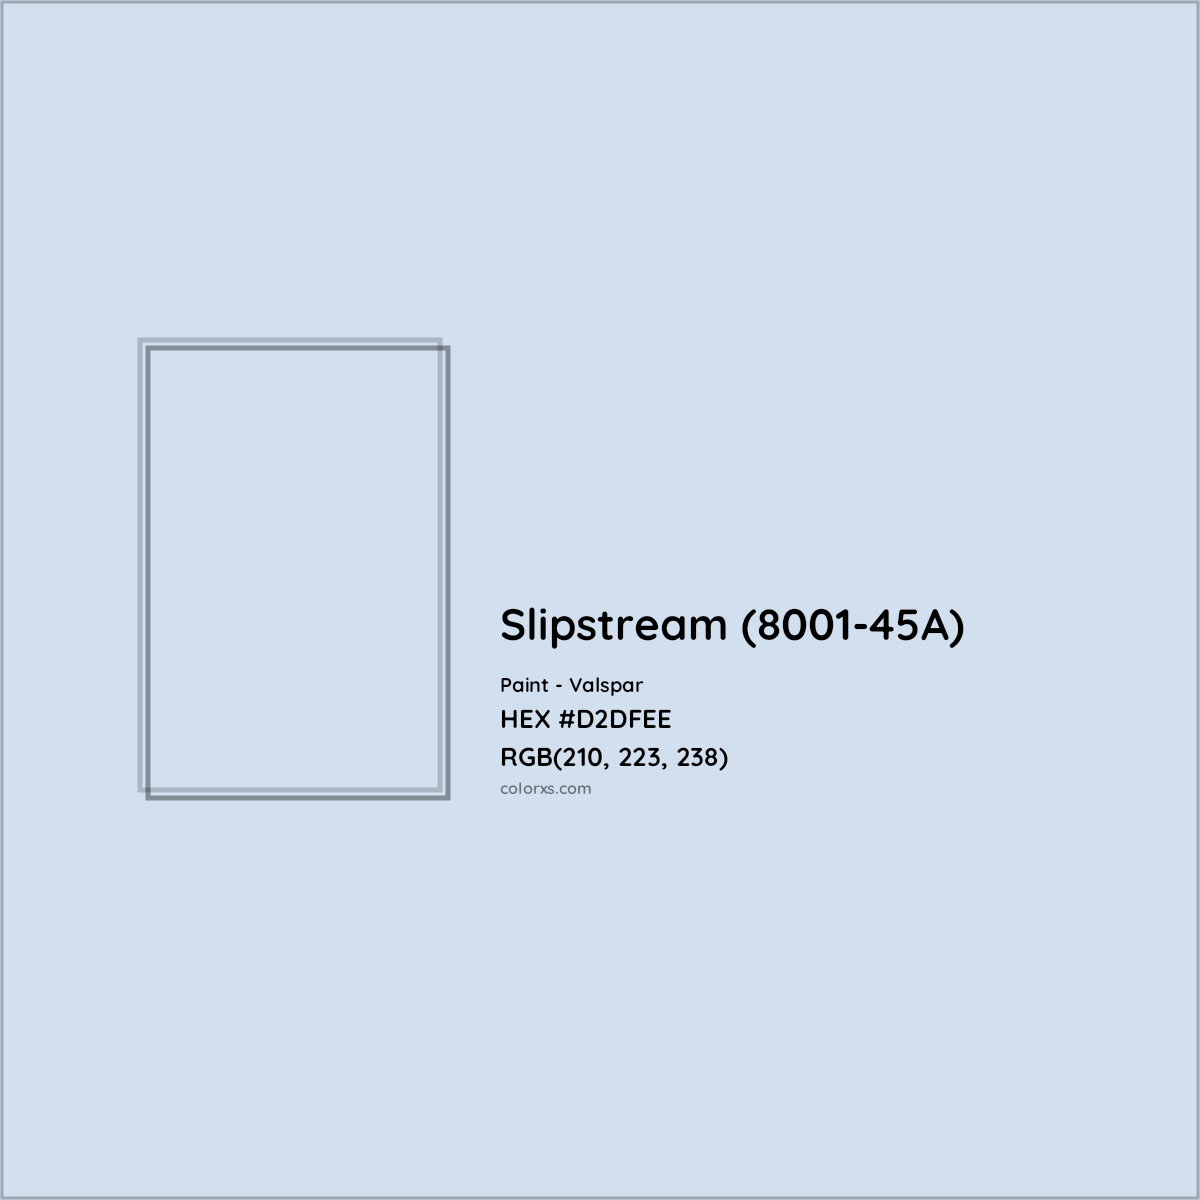 HEX #D2DFEE Slipstream (8001-45A) Paint Valspar - Color Code